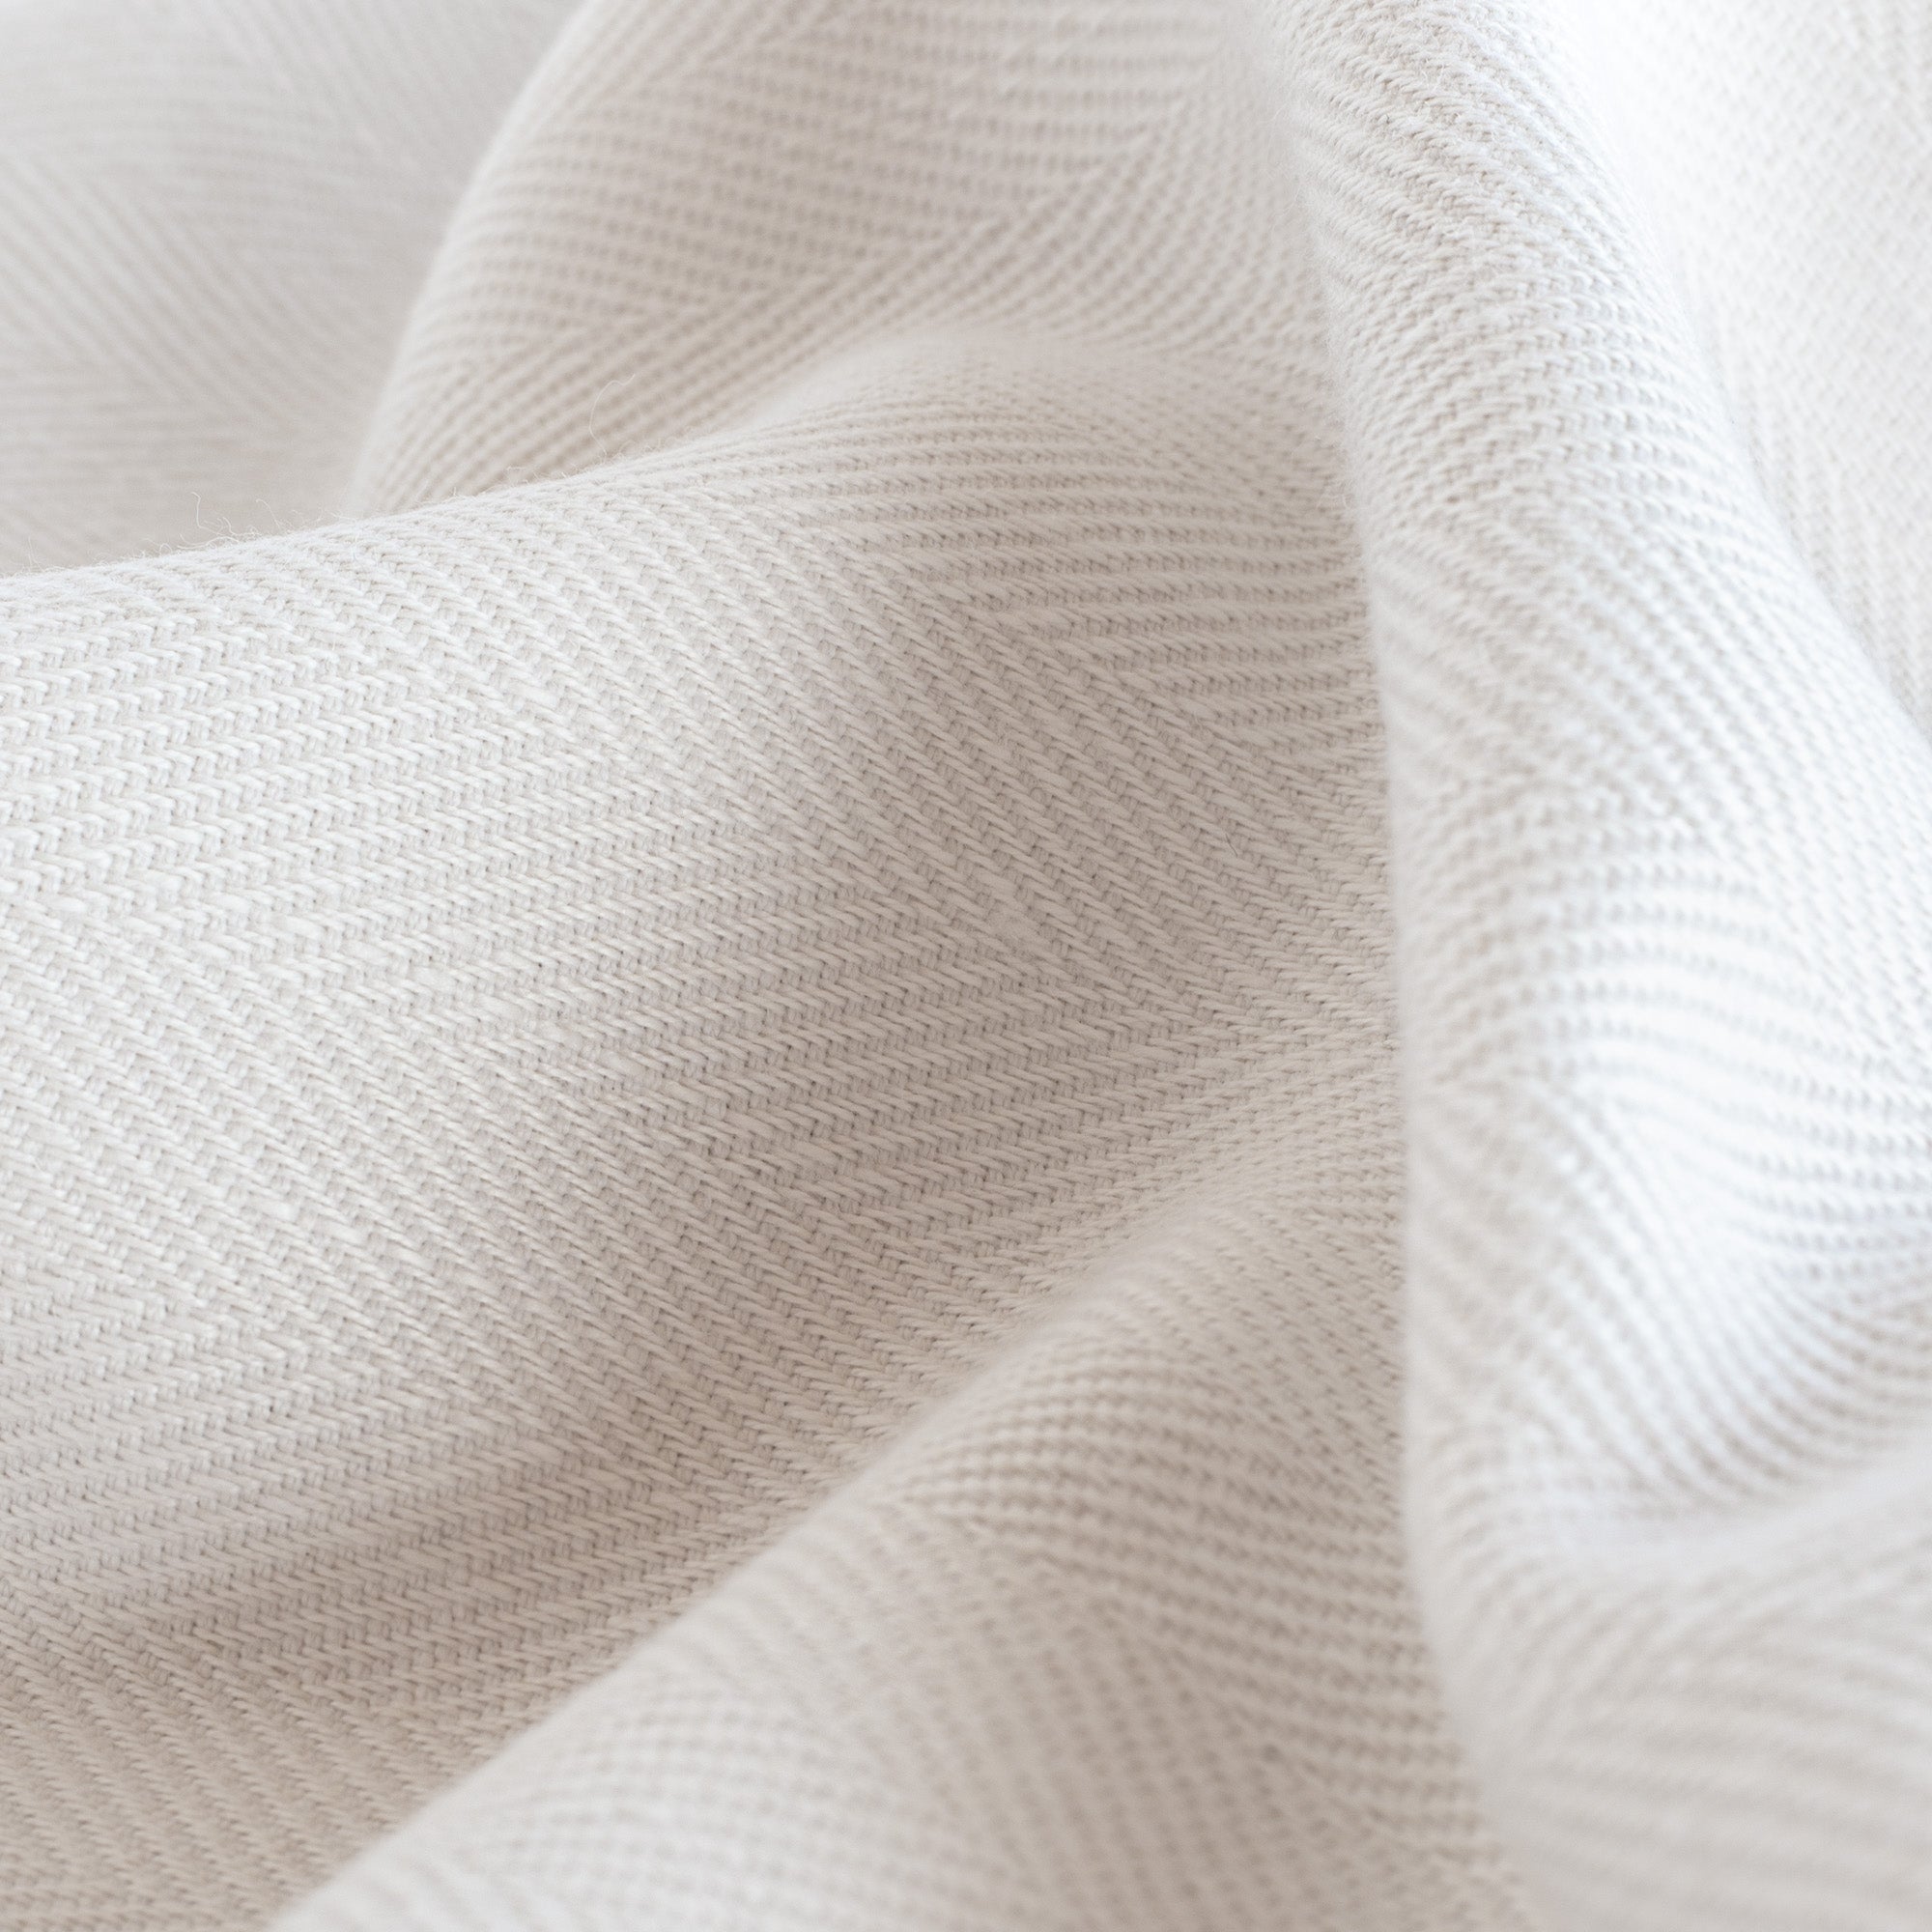 Harris White, a soft white herringbone pattern performance upholstery fabric